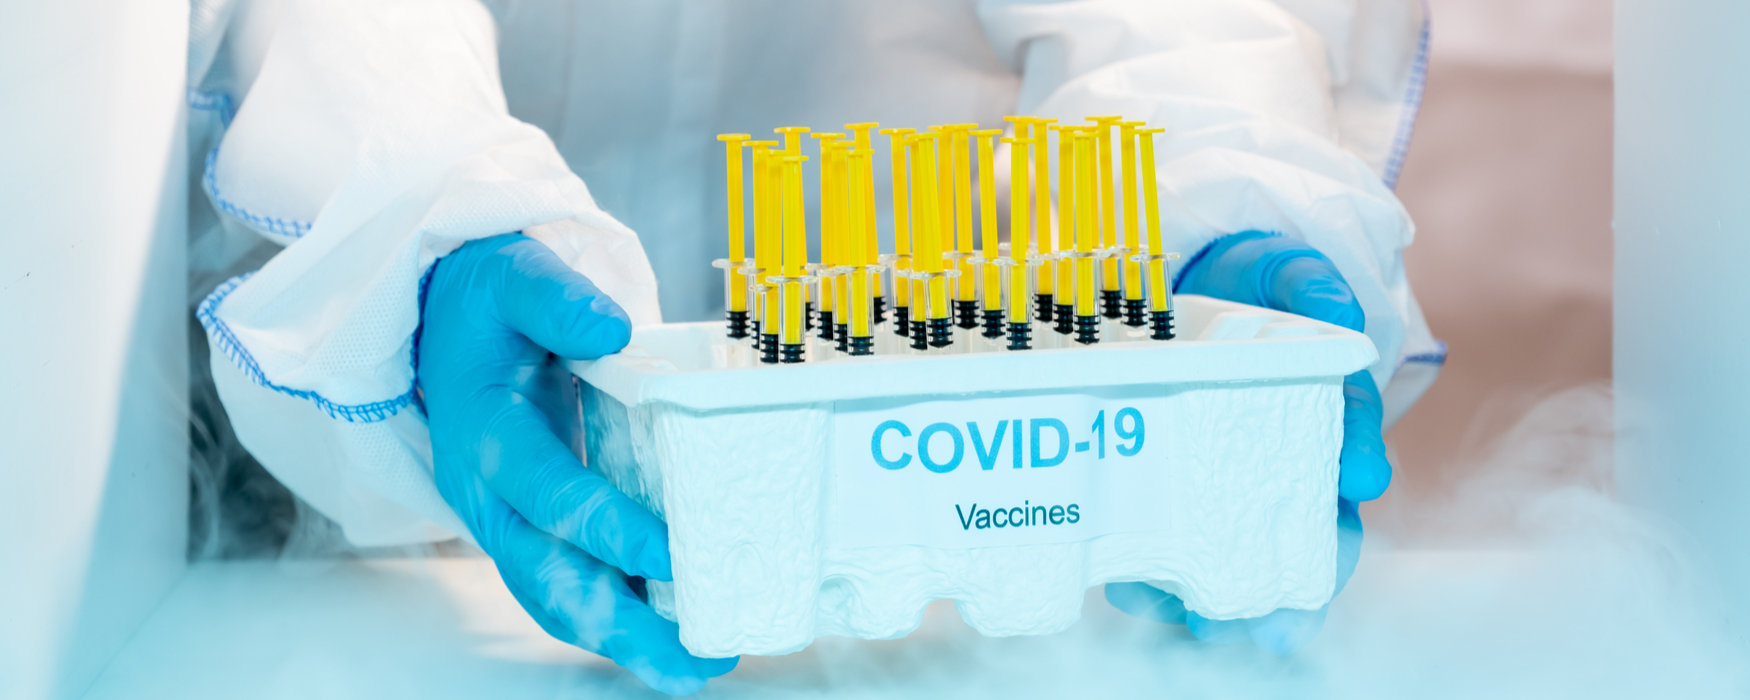 Arizona covid vaccine freezers - covid 19 vaccine freezer - vaccine storage in Arizona